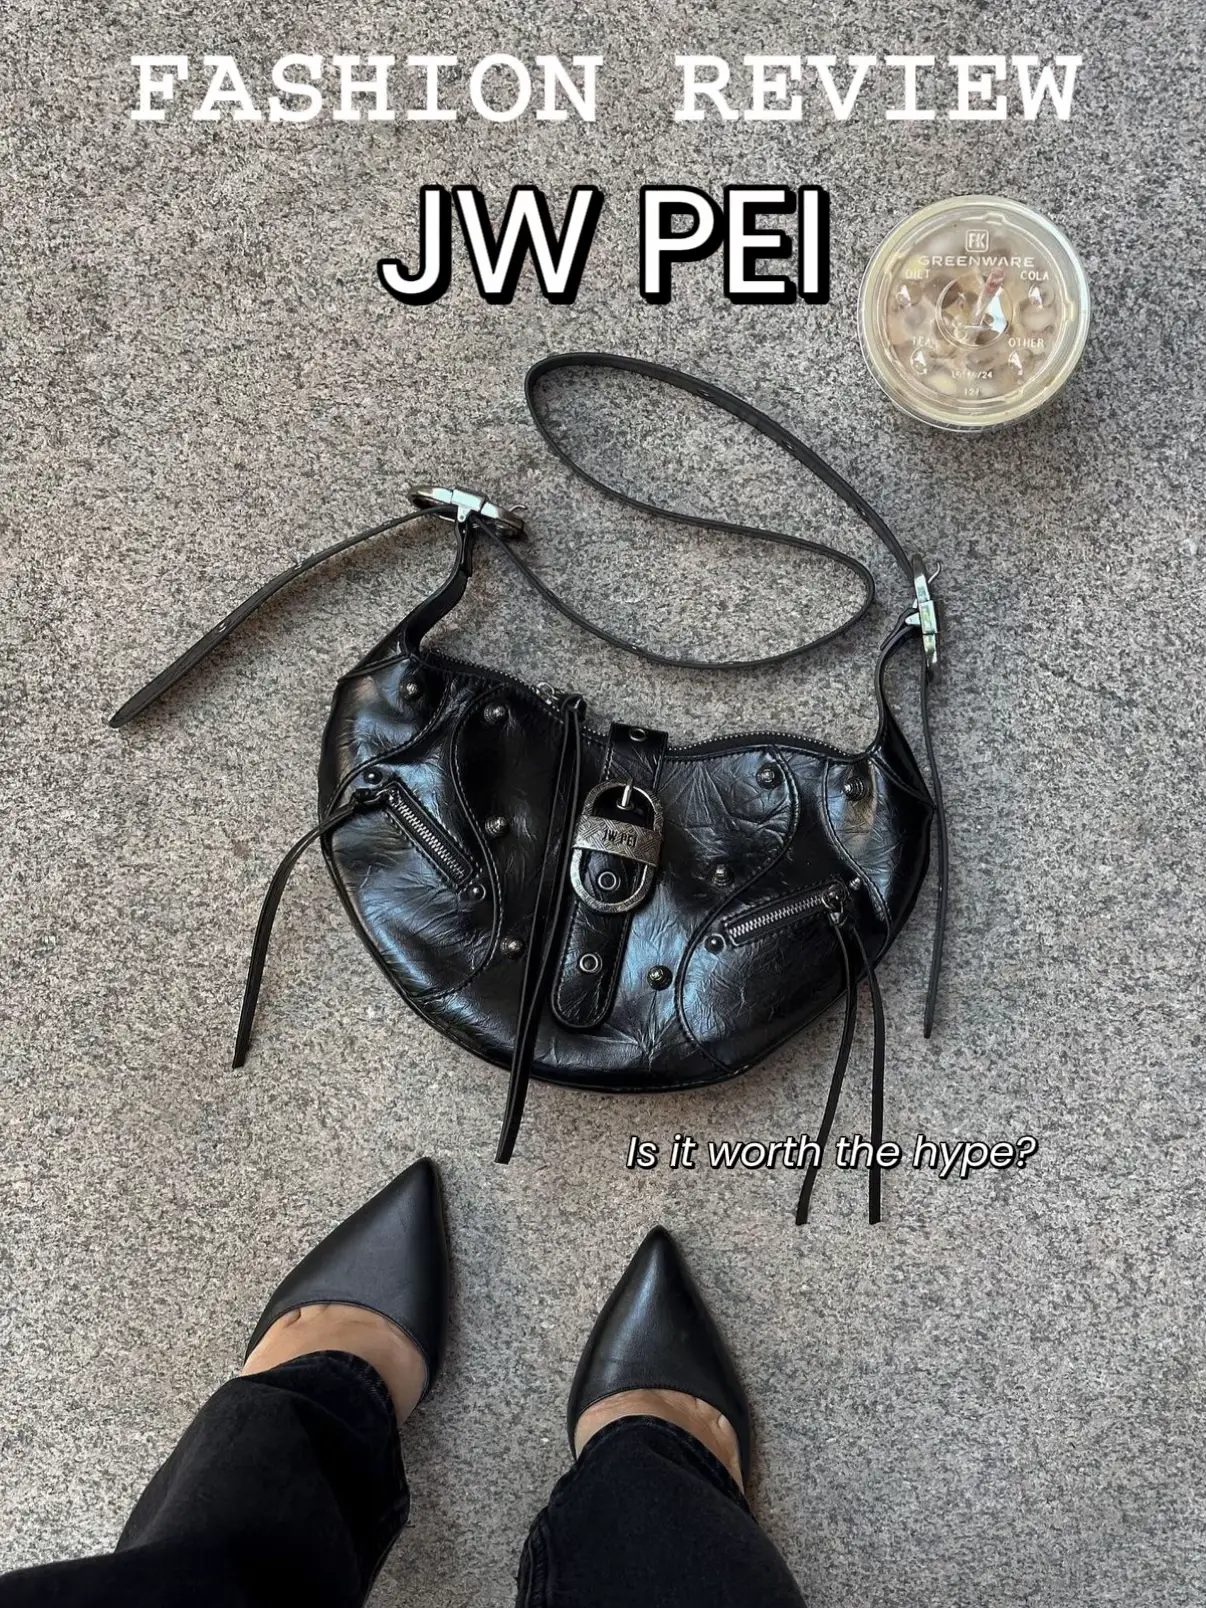 NWT JW PEI Cream Vegan Leather Gabbi Bag